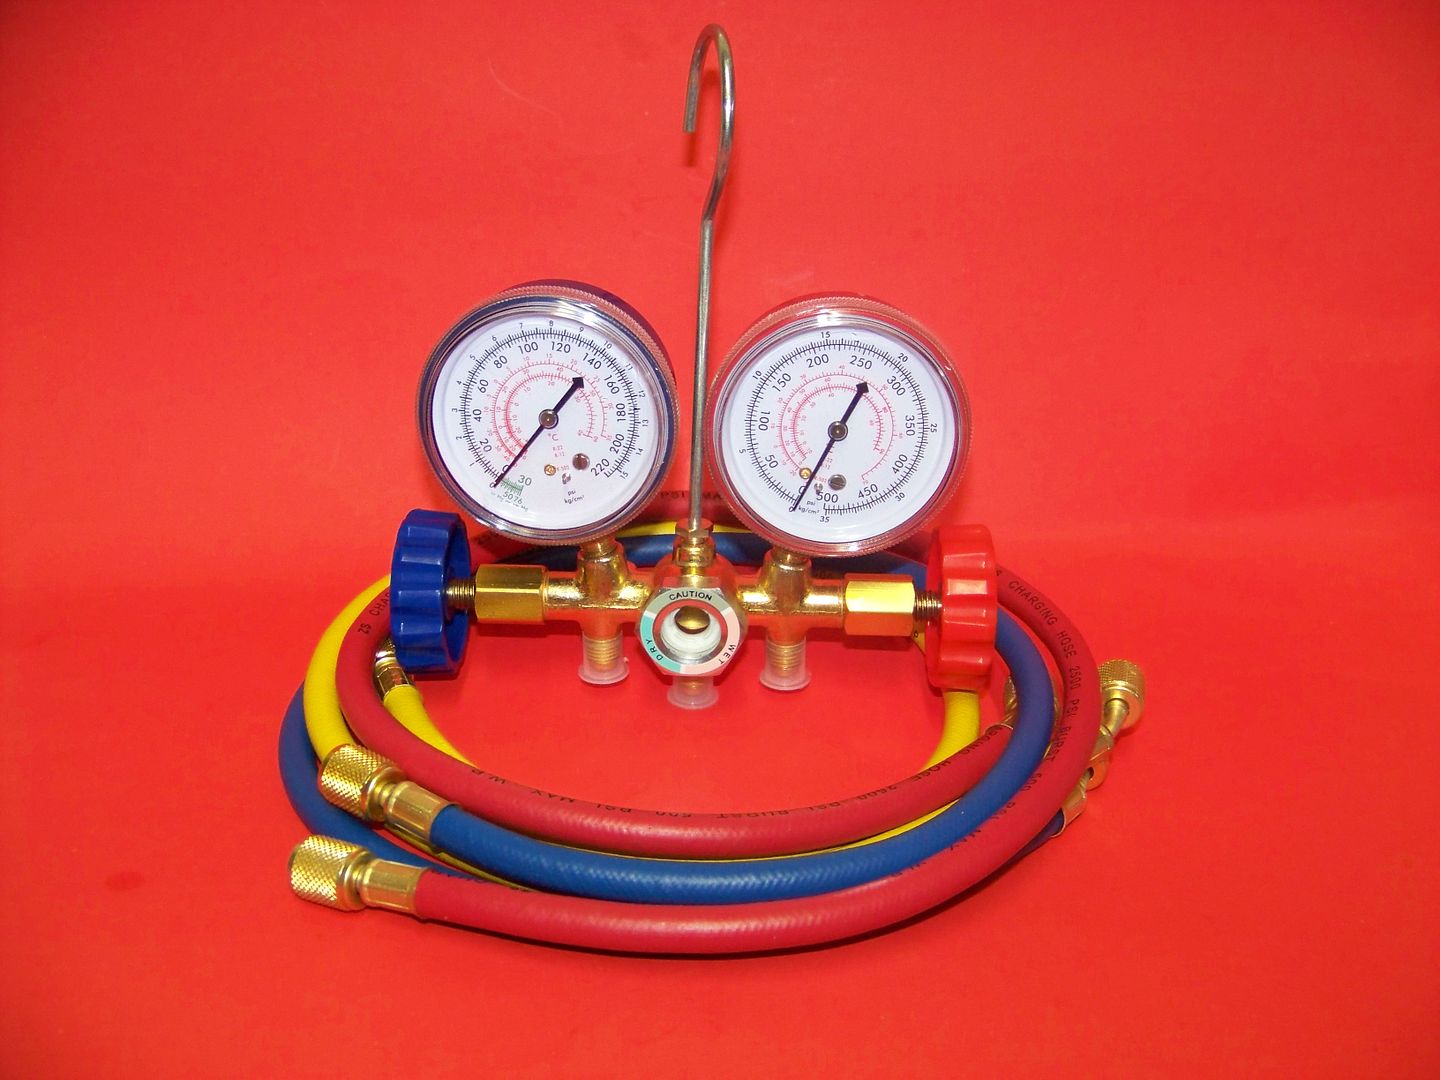  gauges set diagnostic and service tool set easy to read gauges